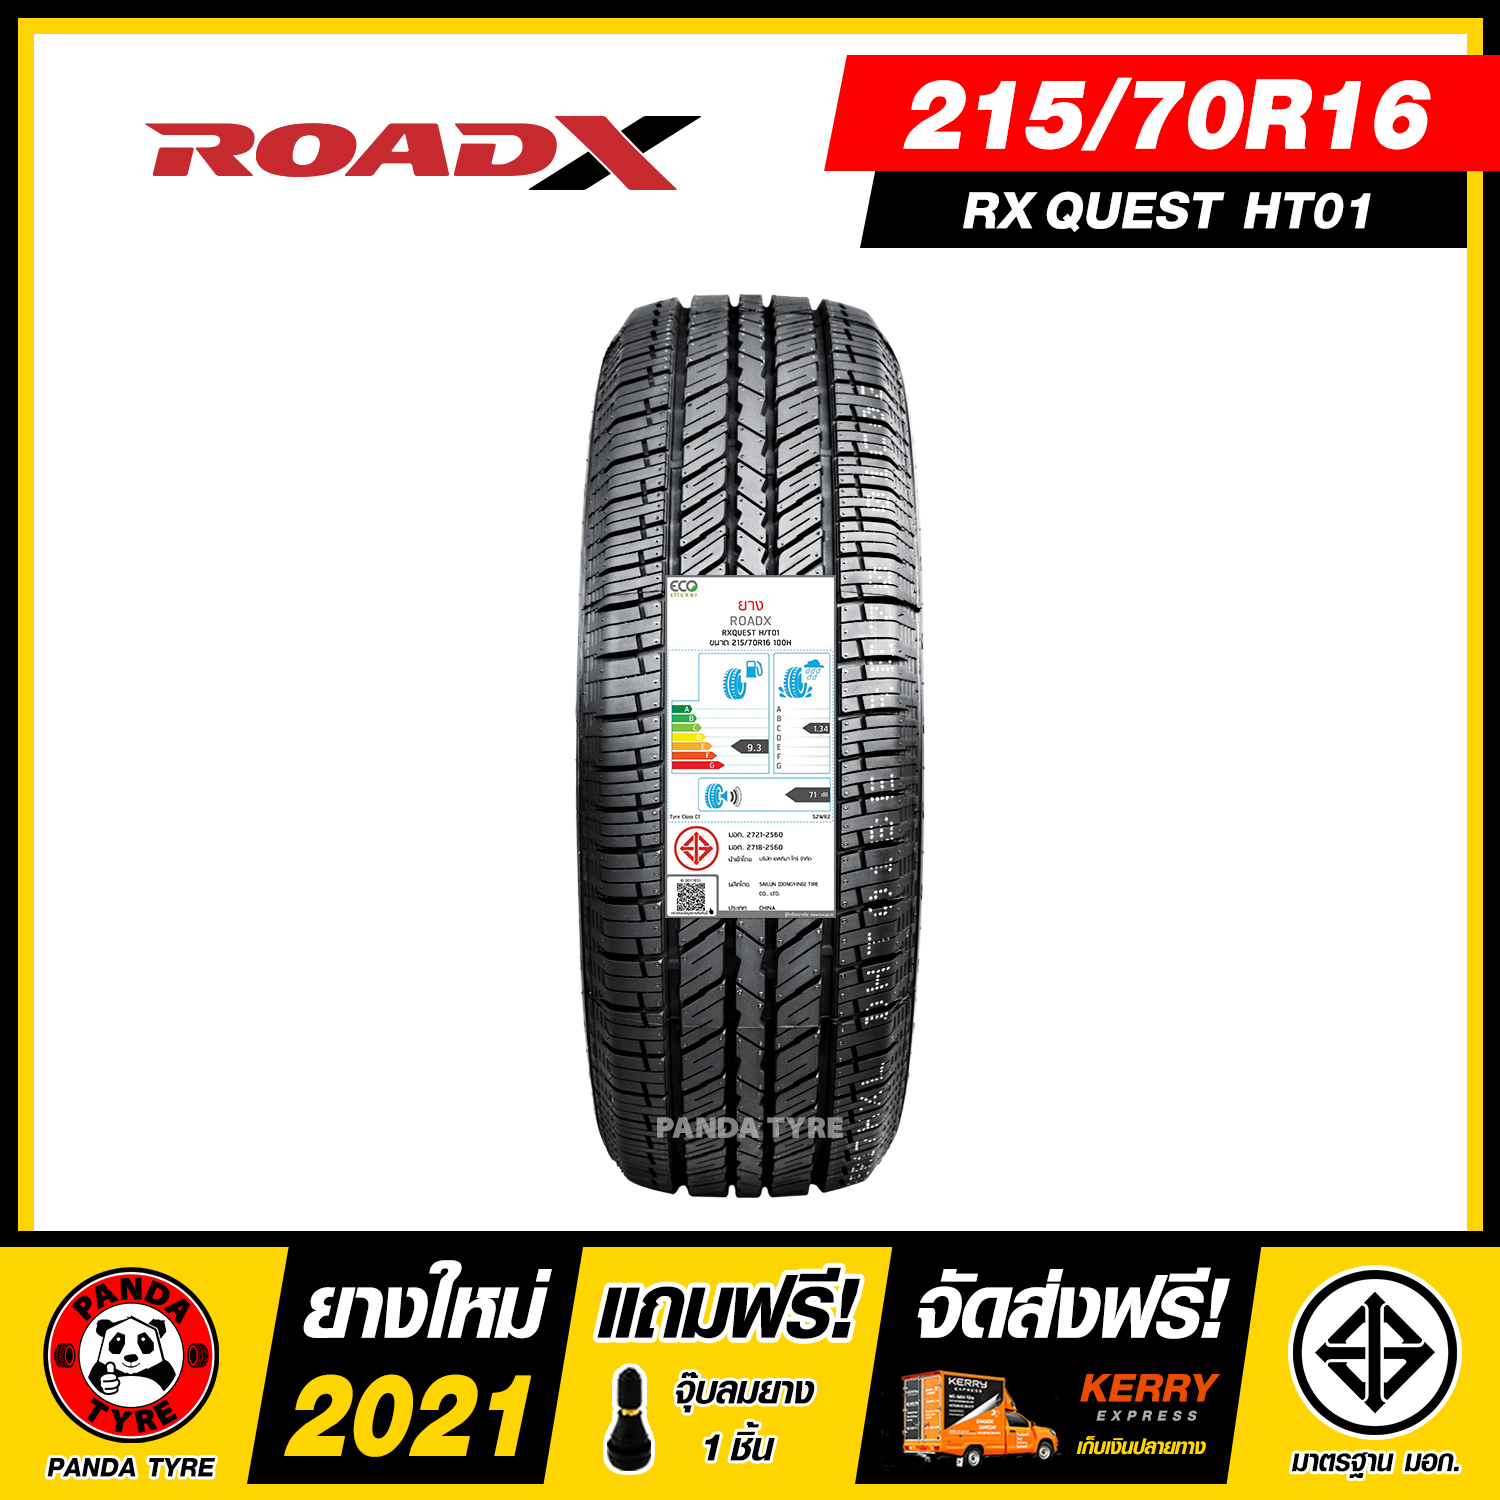 ROADX 215/70R16 ยางรถยนต์ขอบ16 รุ่น RXQUEST HT01 - 1 เส้น (ยางใหม่ผลิตปี 2021)